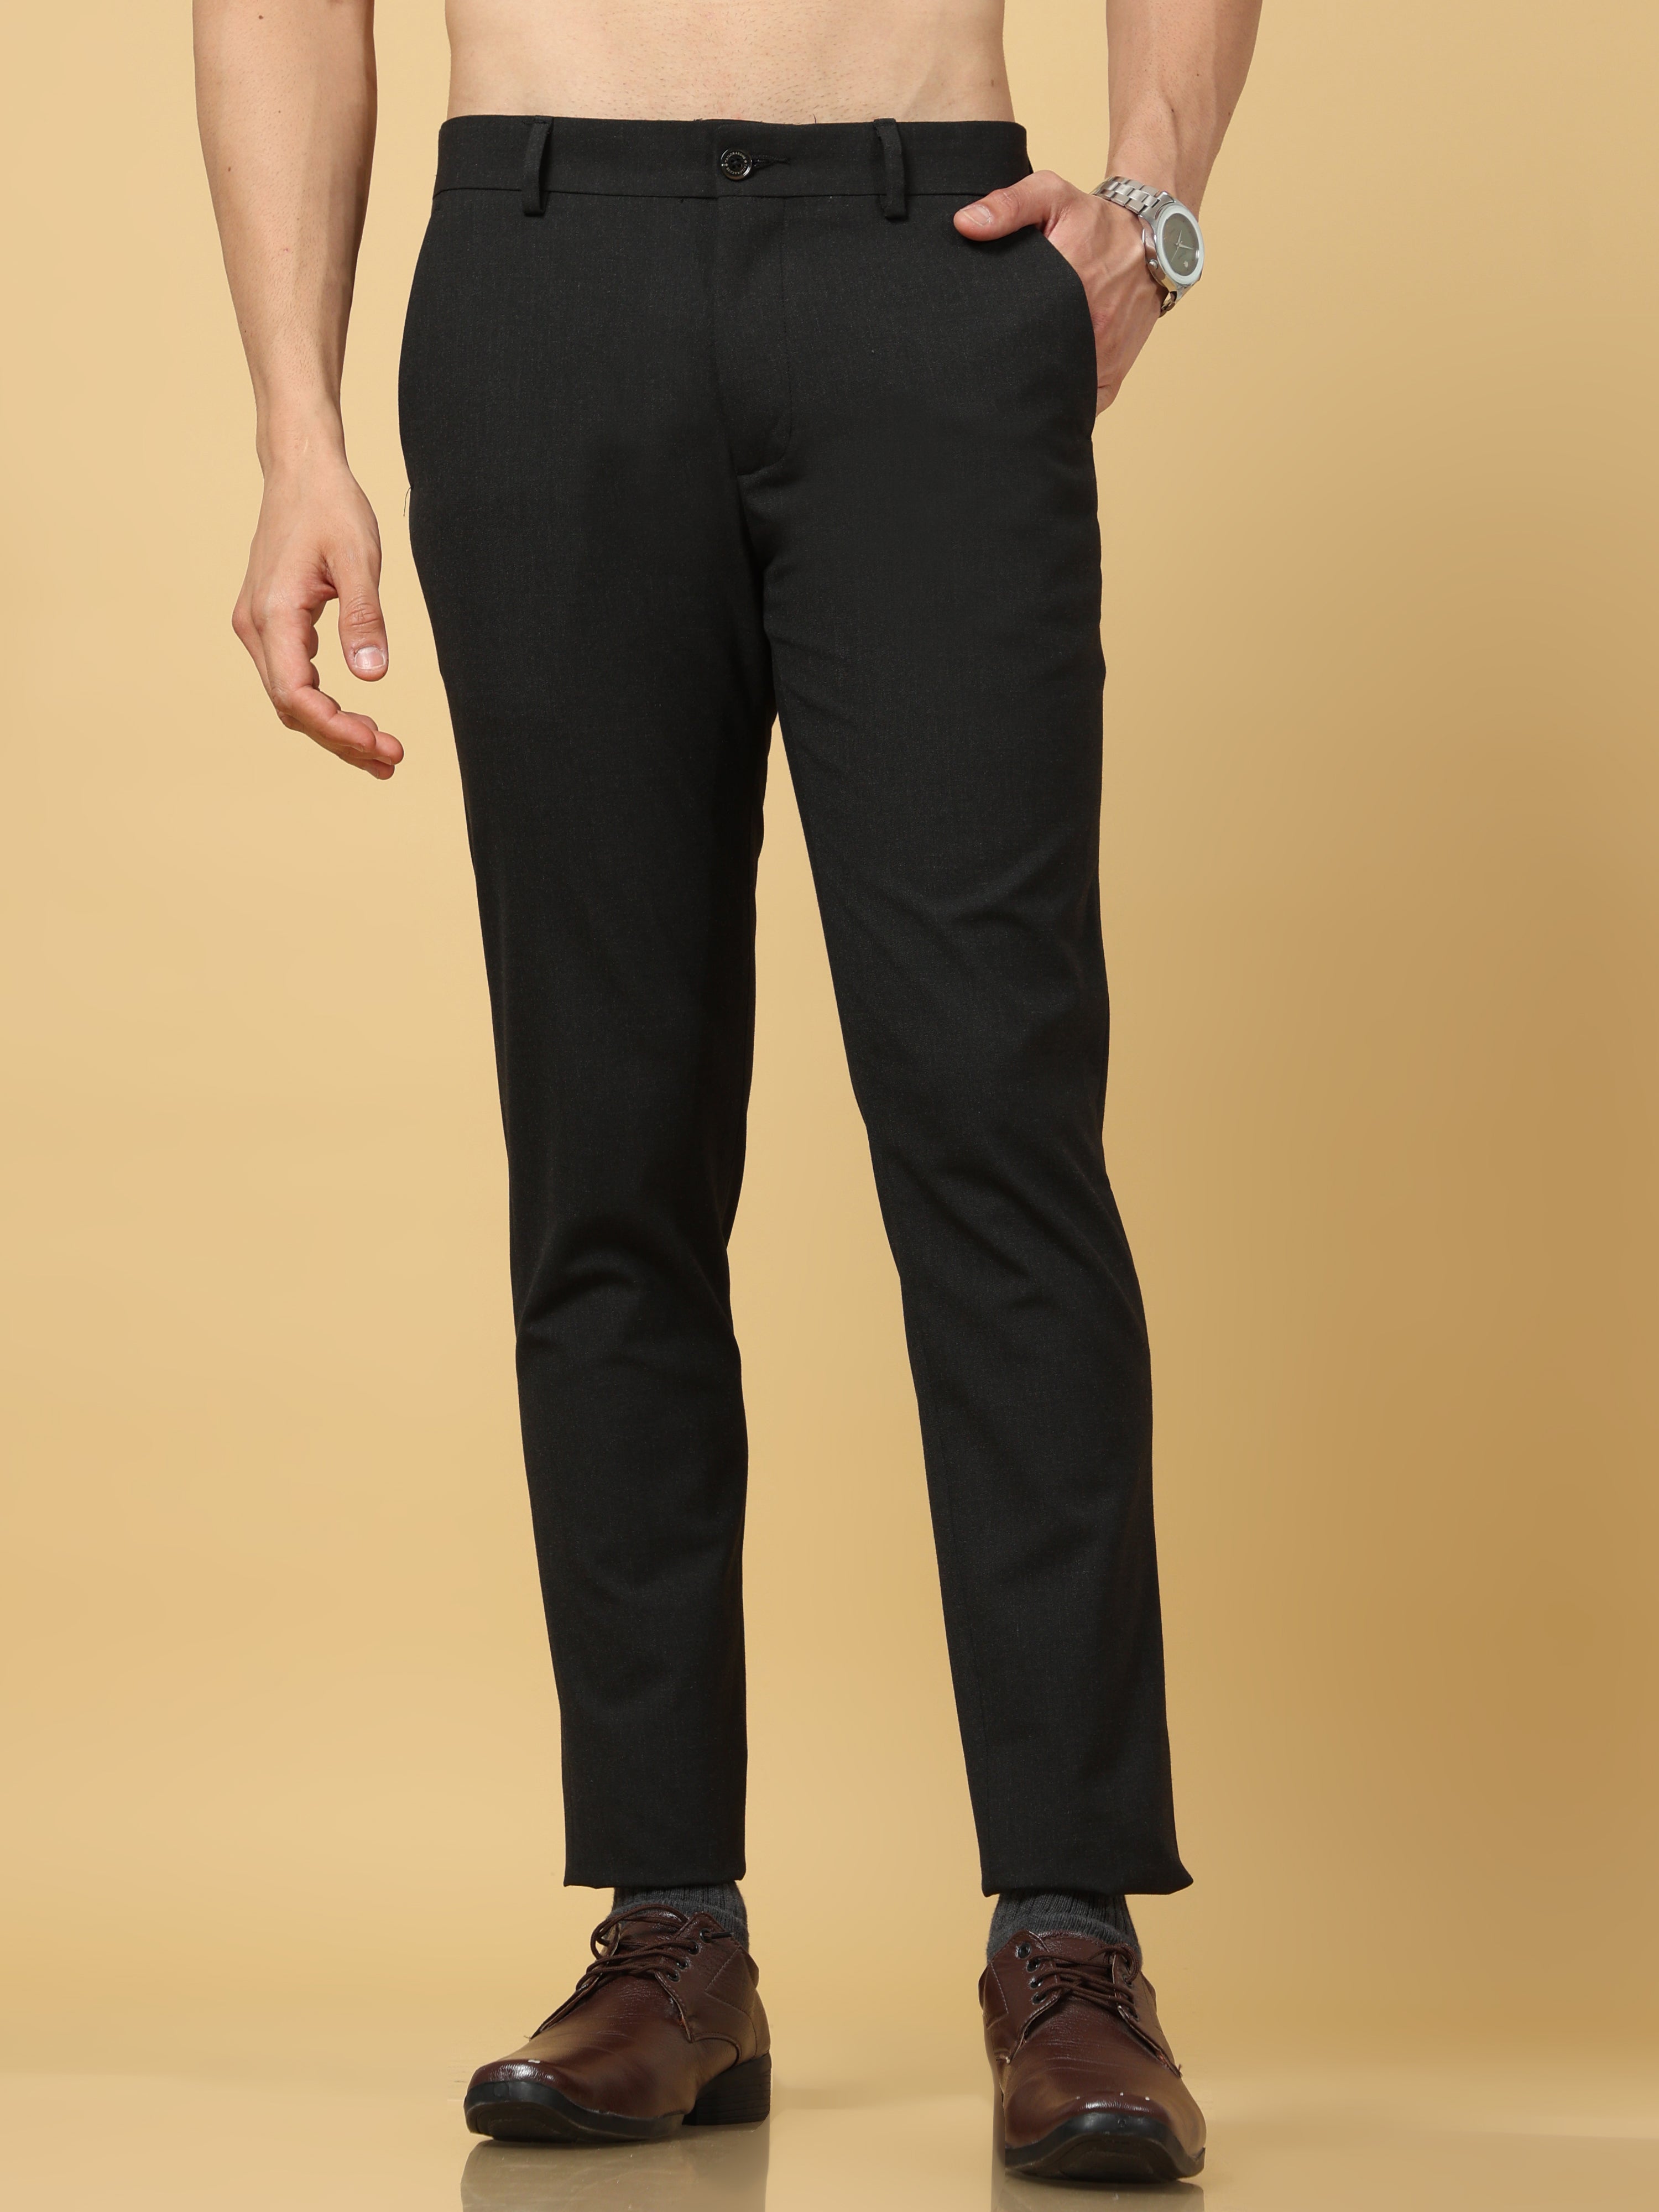 Buy Formal Pants - Formal Trousers for Mens Online